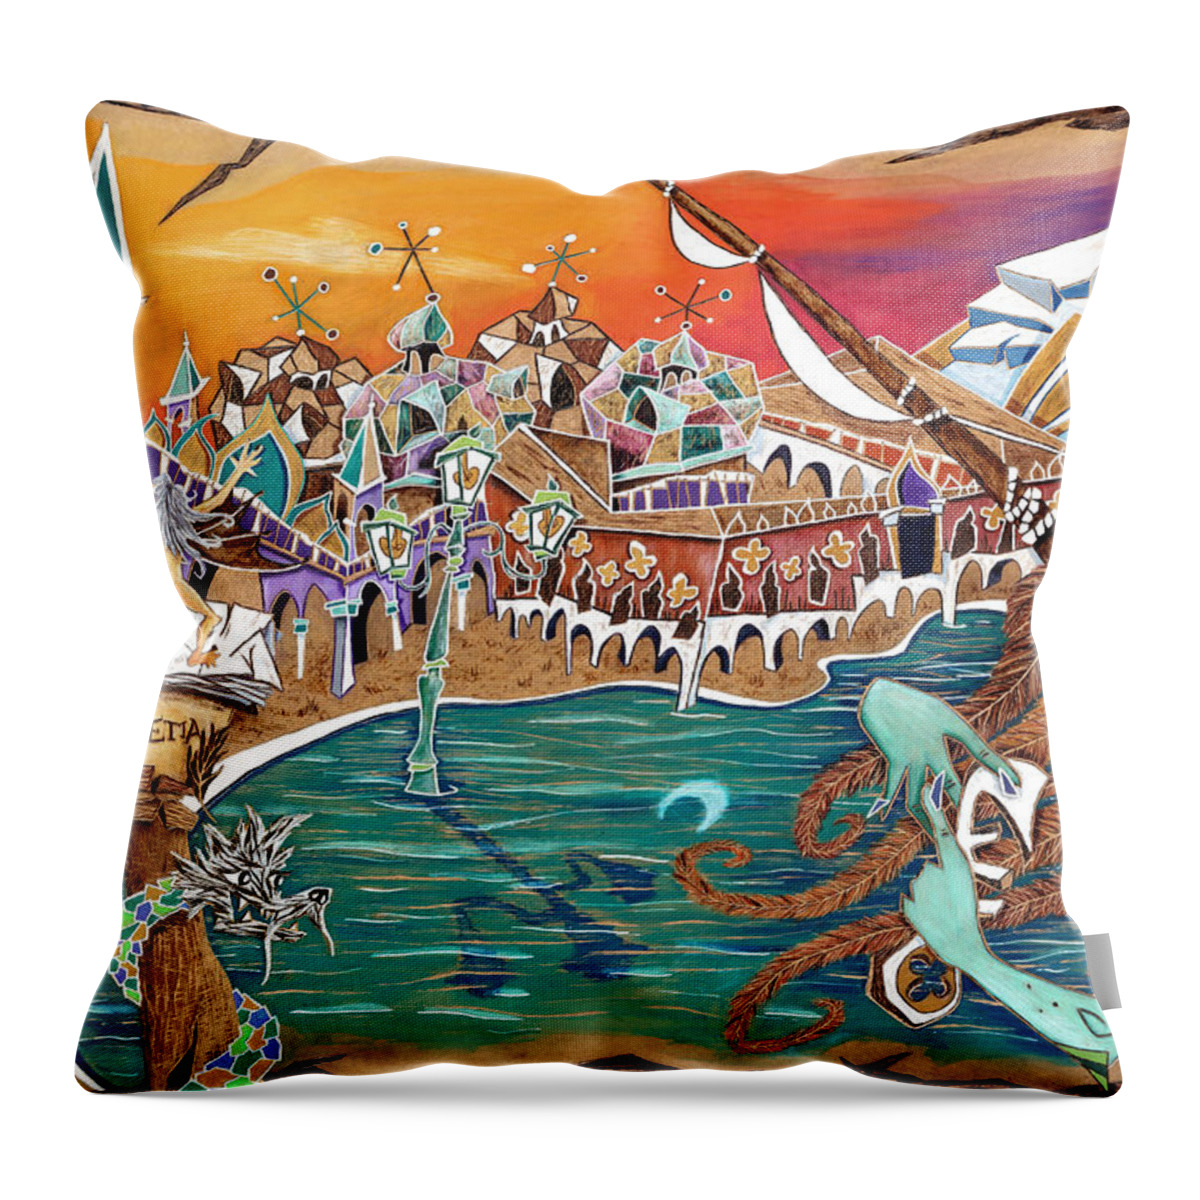 Bacino Di San Marco Throw Pillow featuring the painting IL BaCio Di S. MaRCo - Venice landscape by Arte Venezia